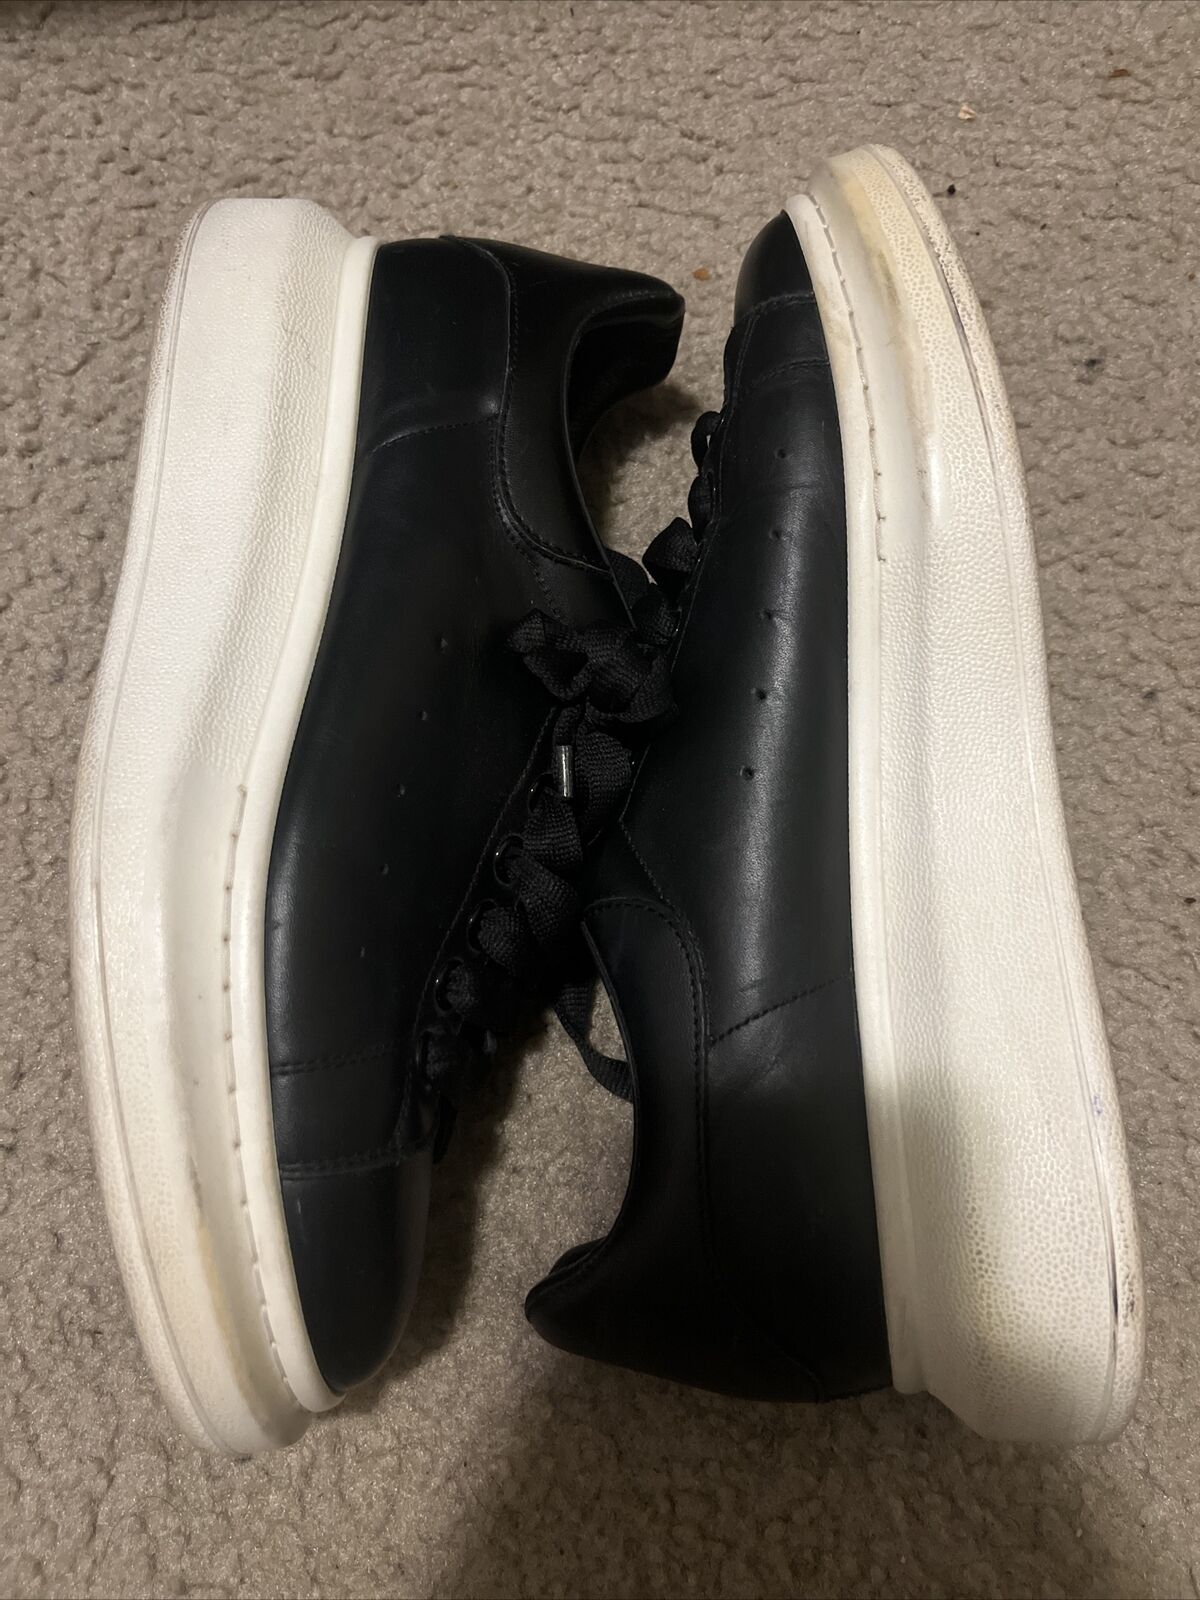 Alexander McQueen Oversized Sneakers - Black/White Size 42 US 9.5